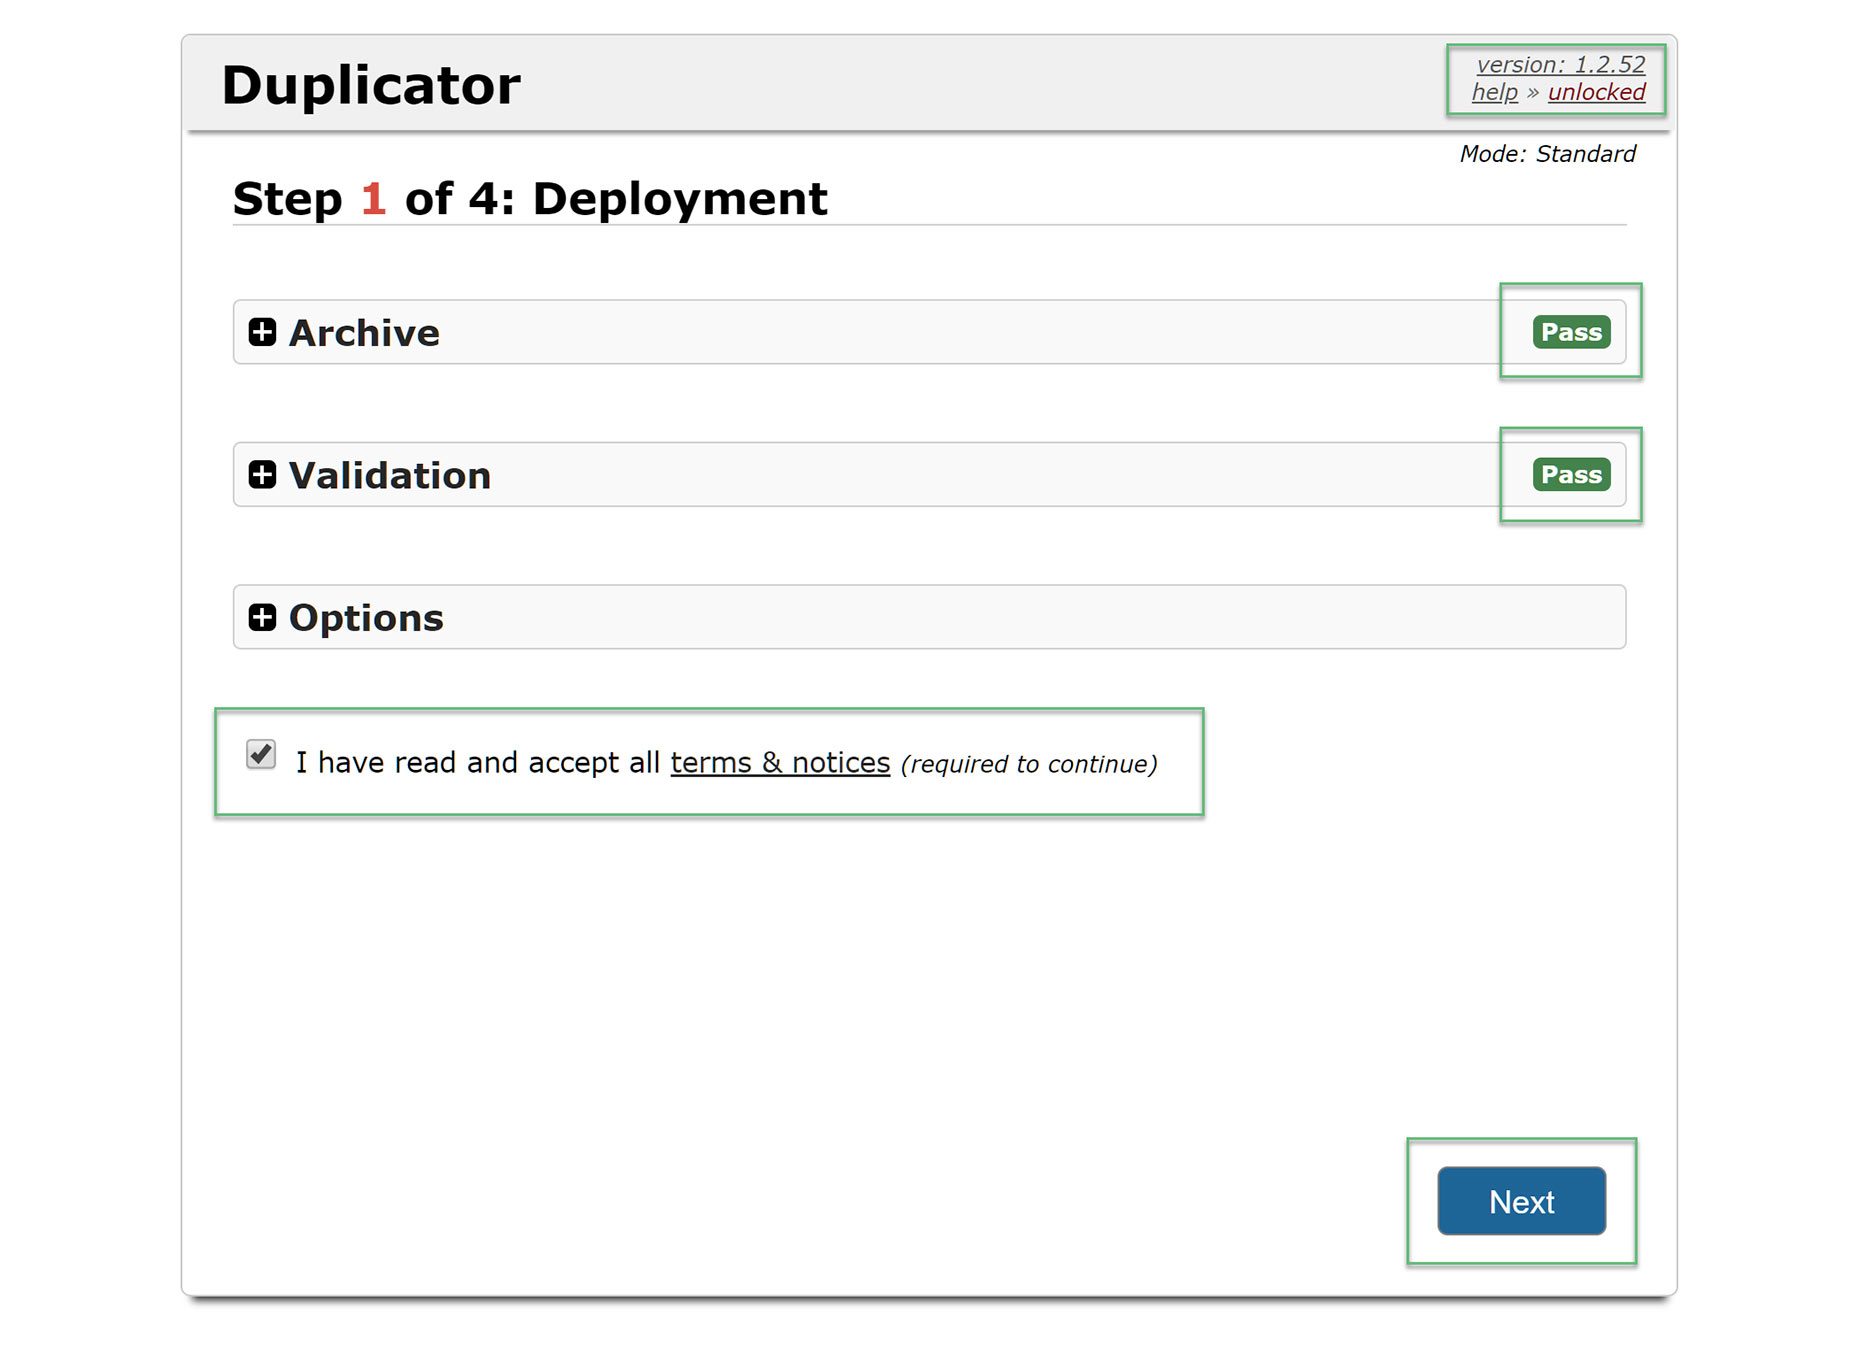 Duplicator - Deploy - Step 1